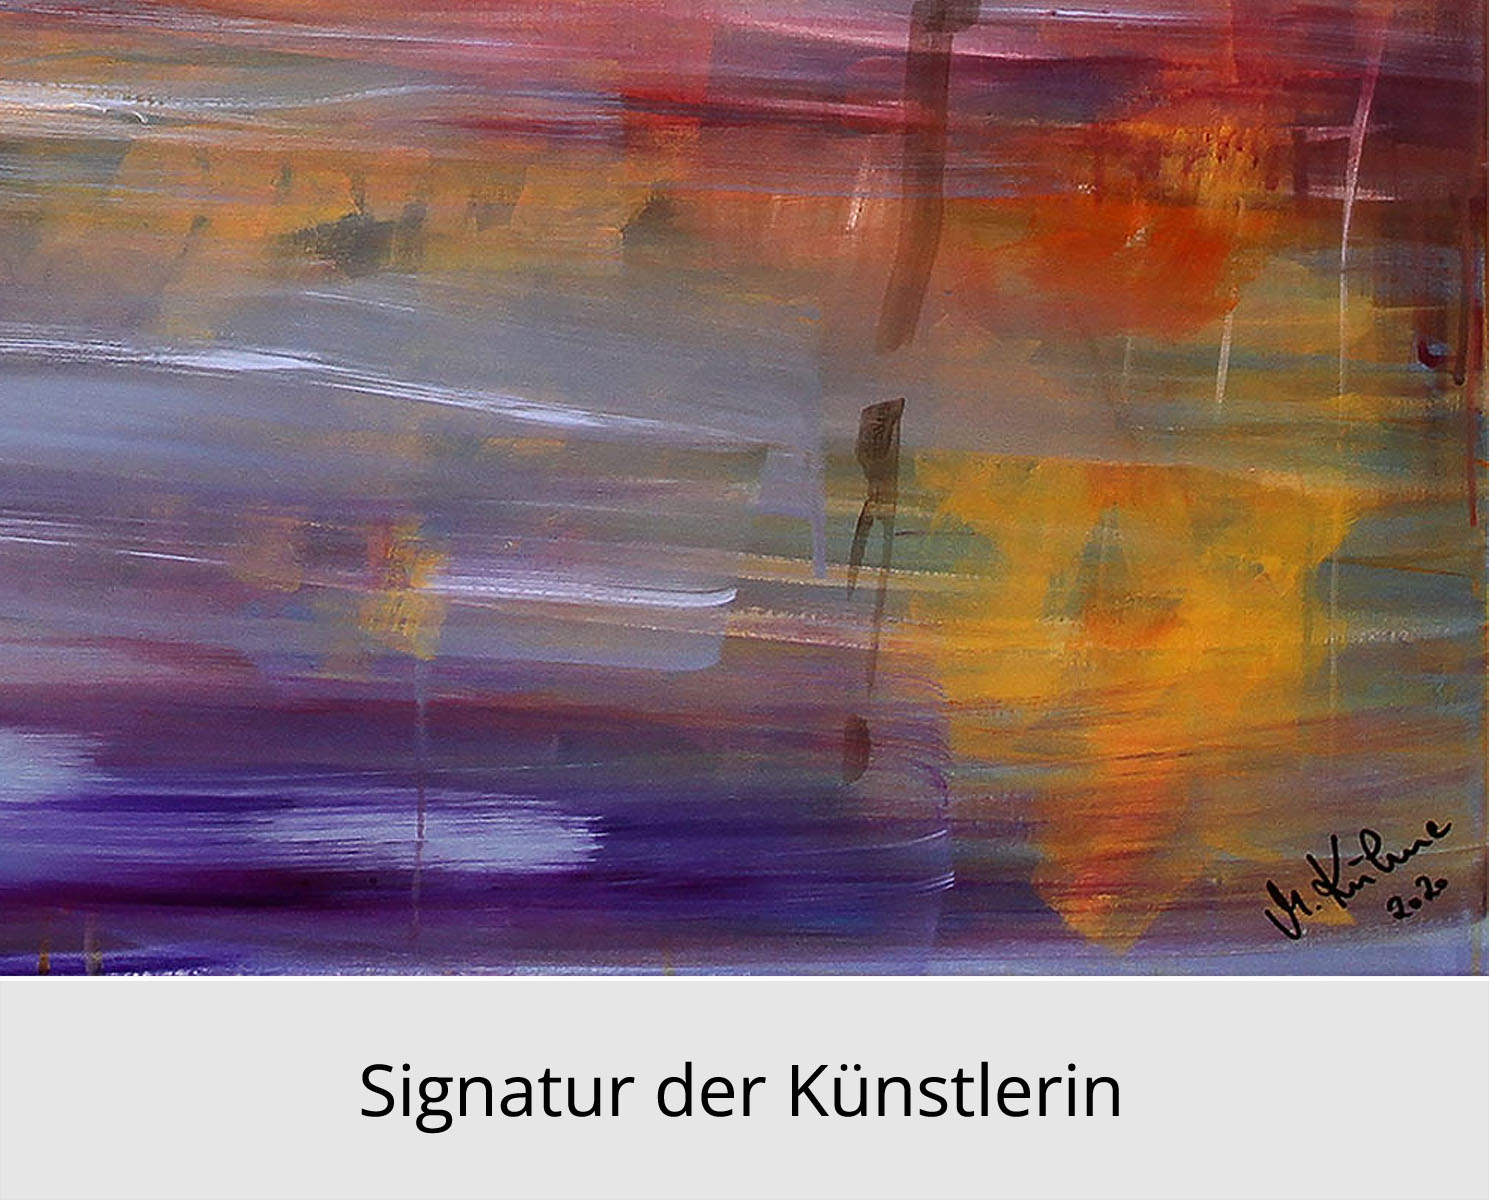 M. Kühne: "Farbspektakel", Edition, signierter Kunstdruck